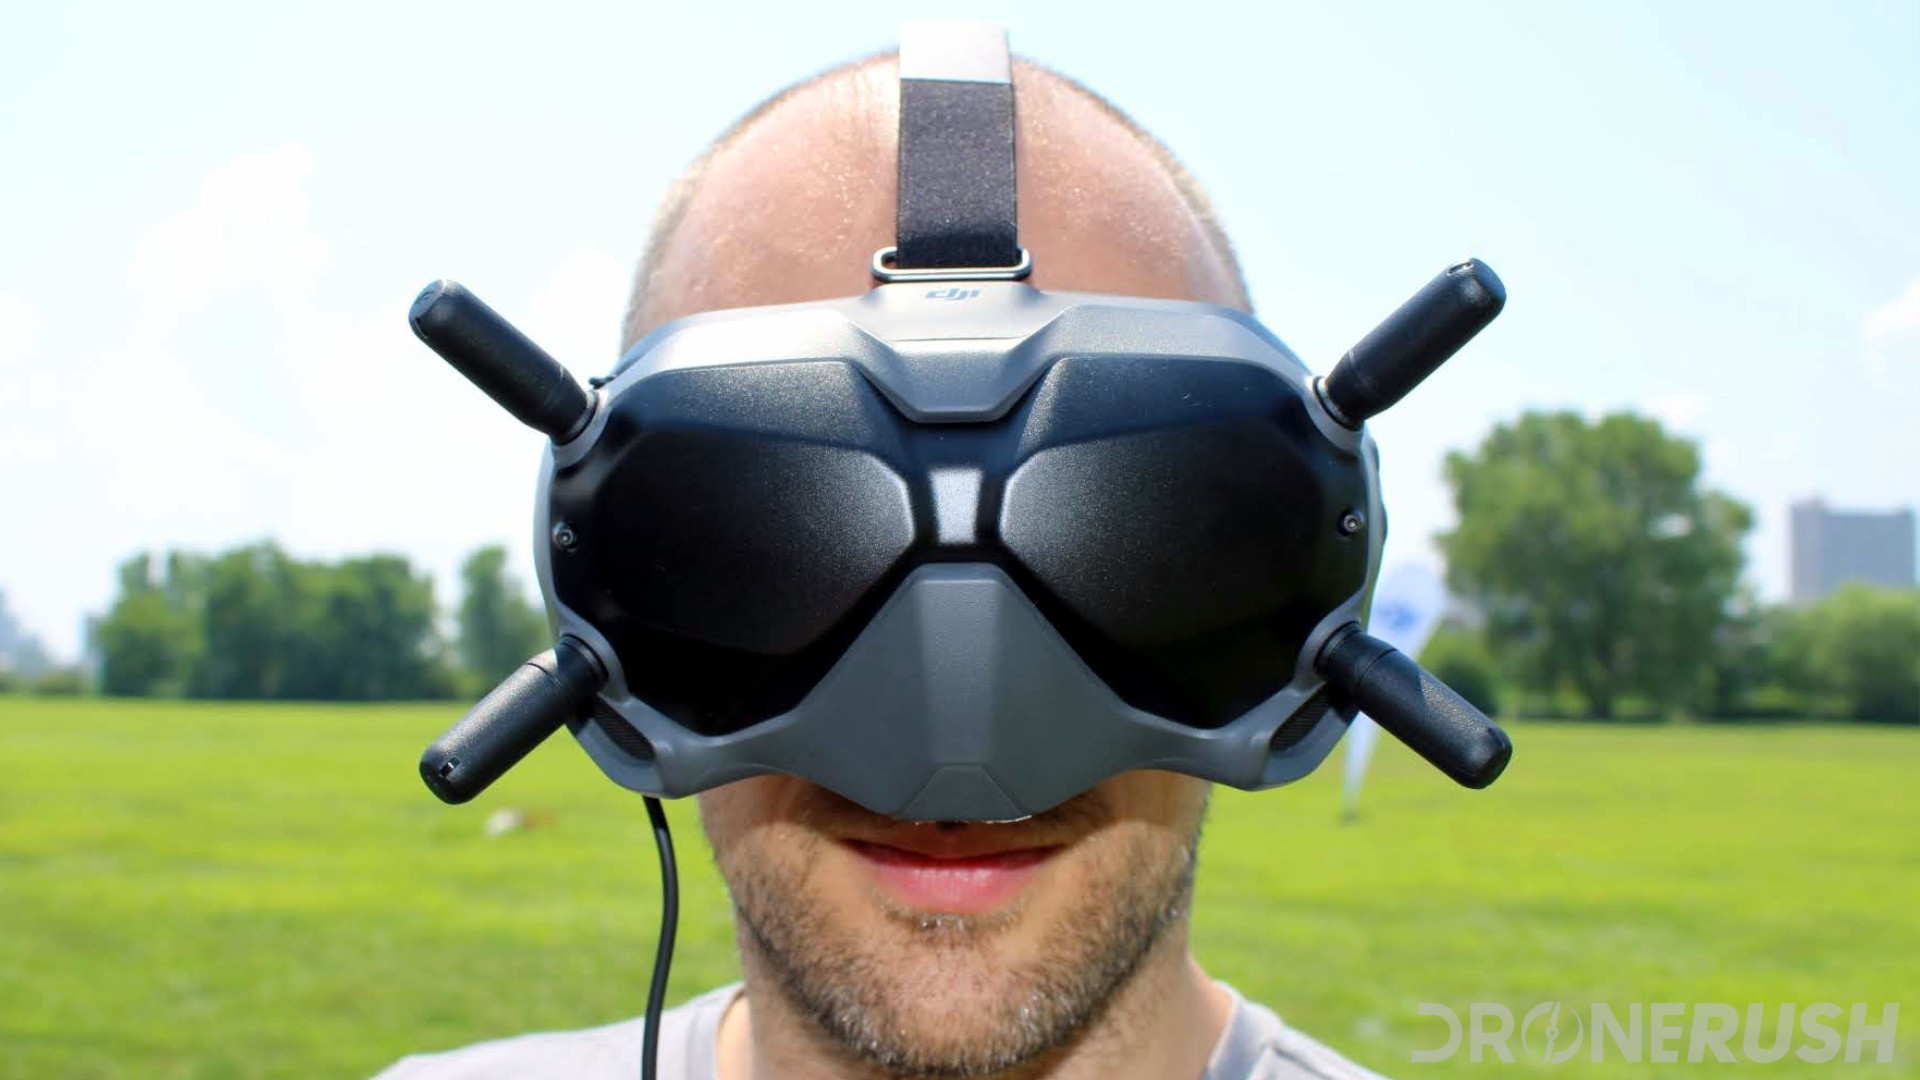 Praktisk Exert talsmand AR glasses vs VR headsets - which are better for FPV? - Drone Rush